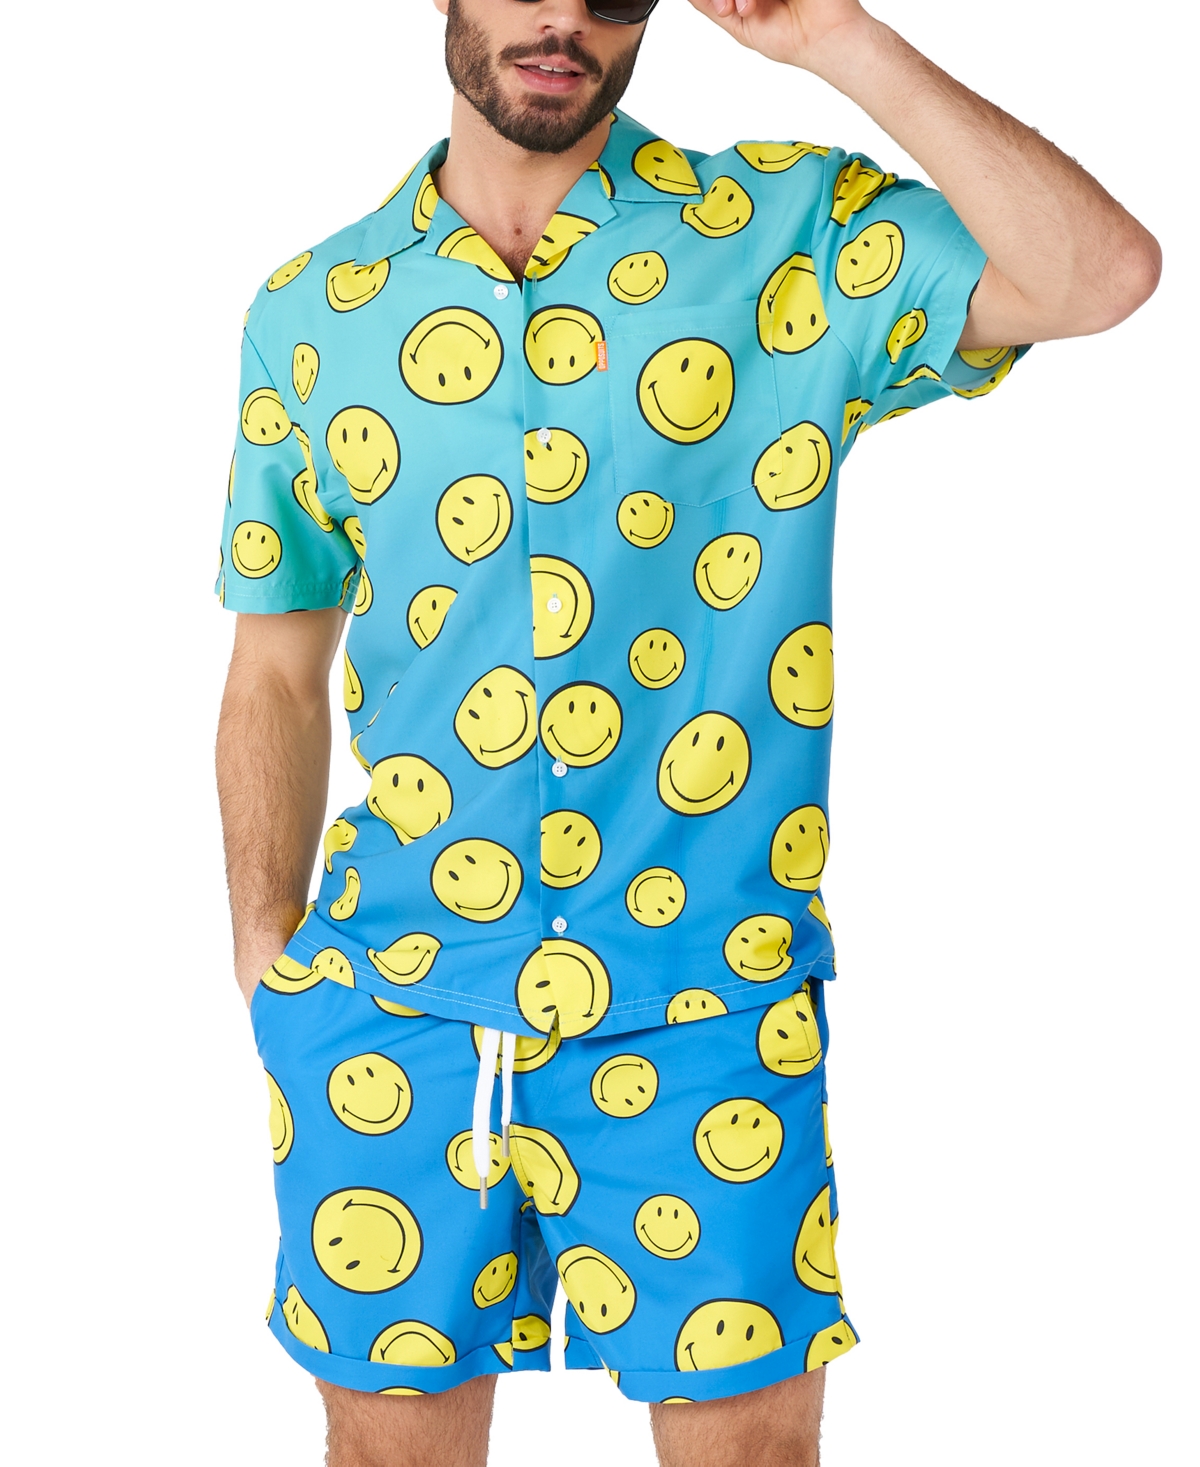 Men's Short-Sleeve Smiley Face Shirt & Shorts Set - Blue